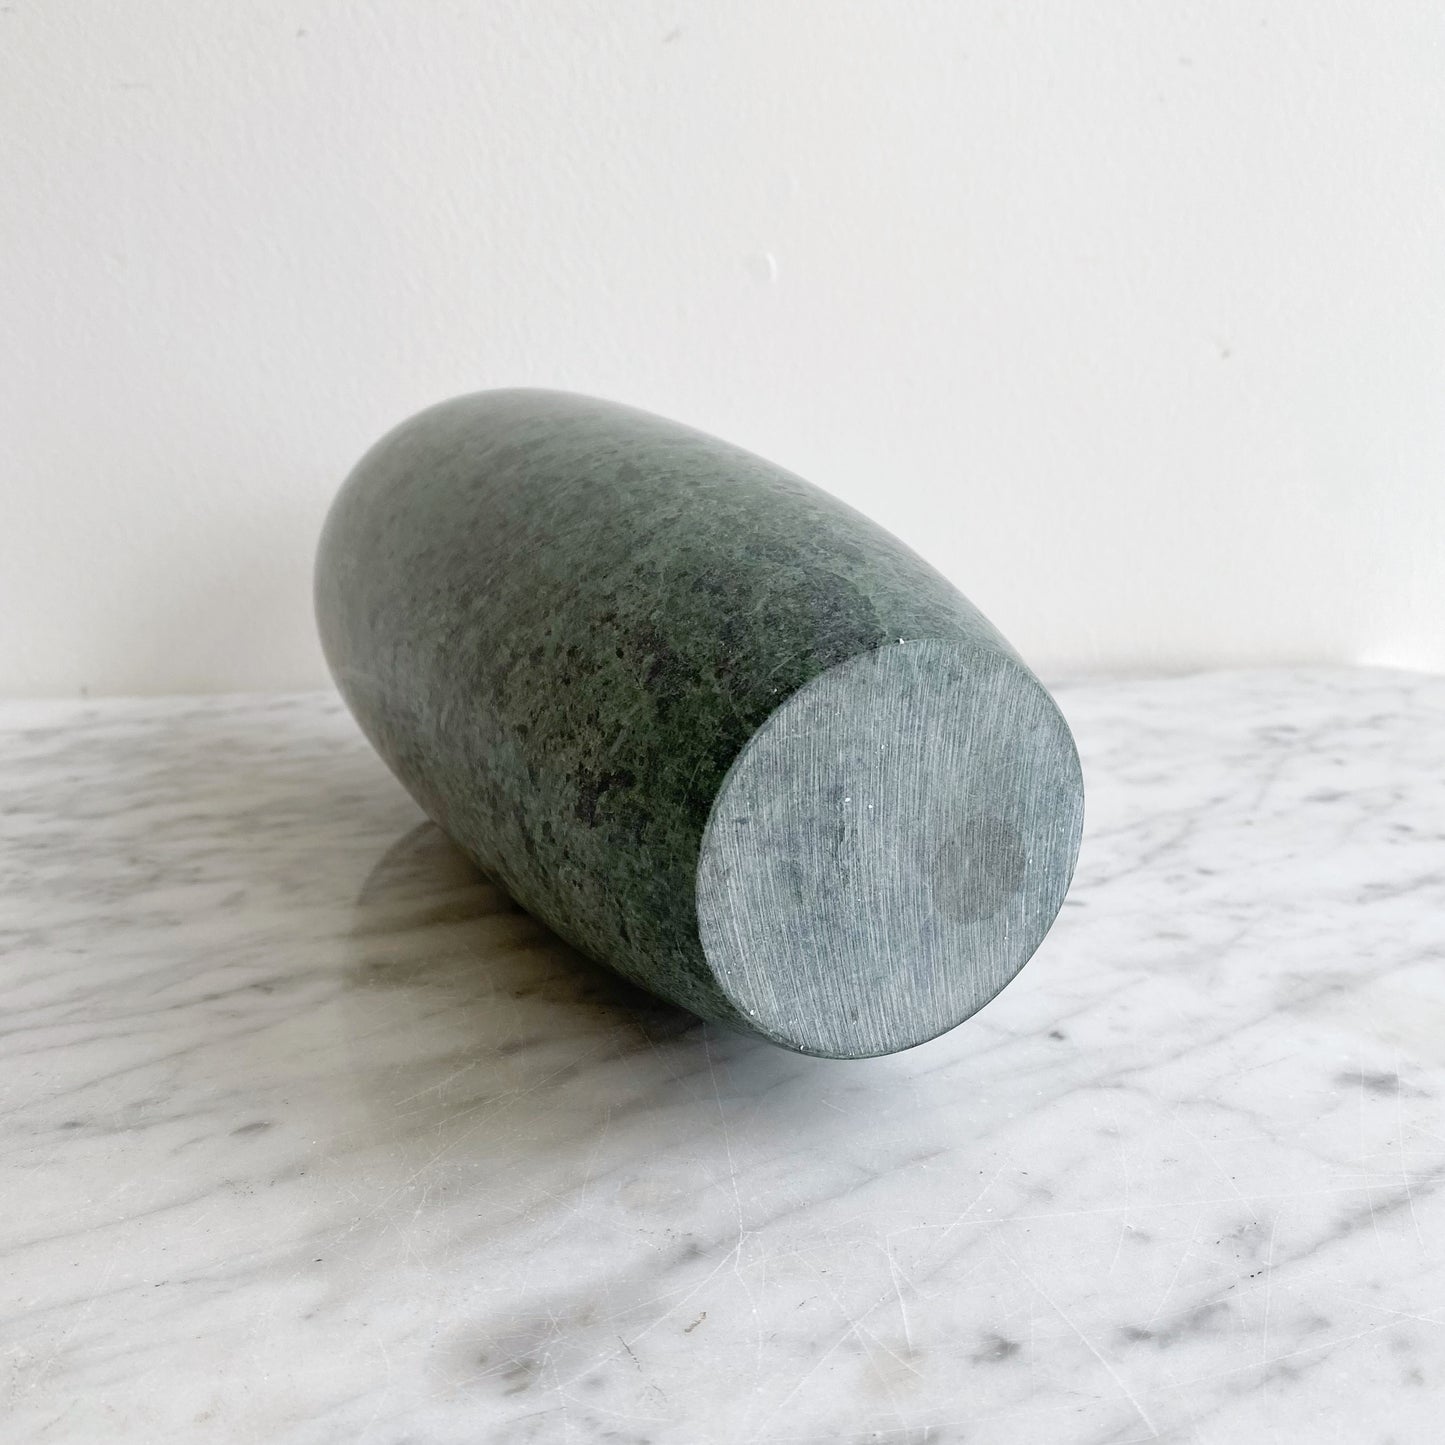 Vintage Green Marble Vase, 9"